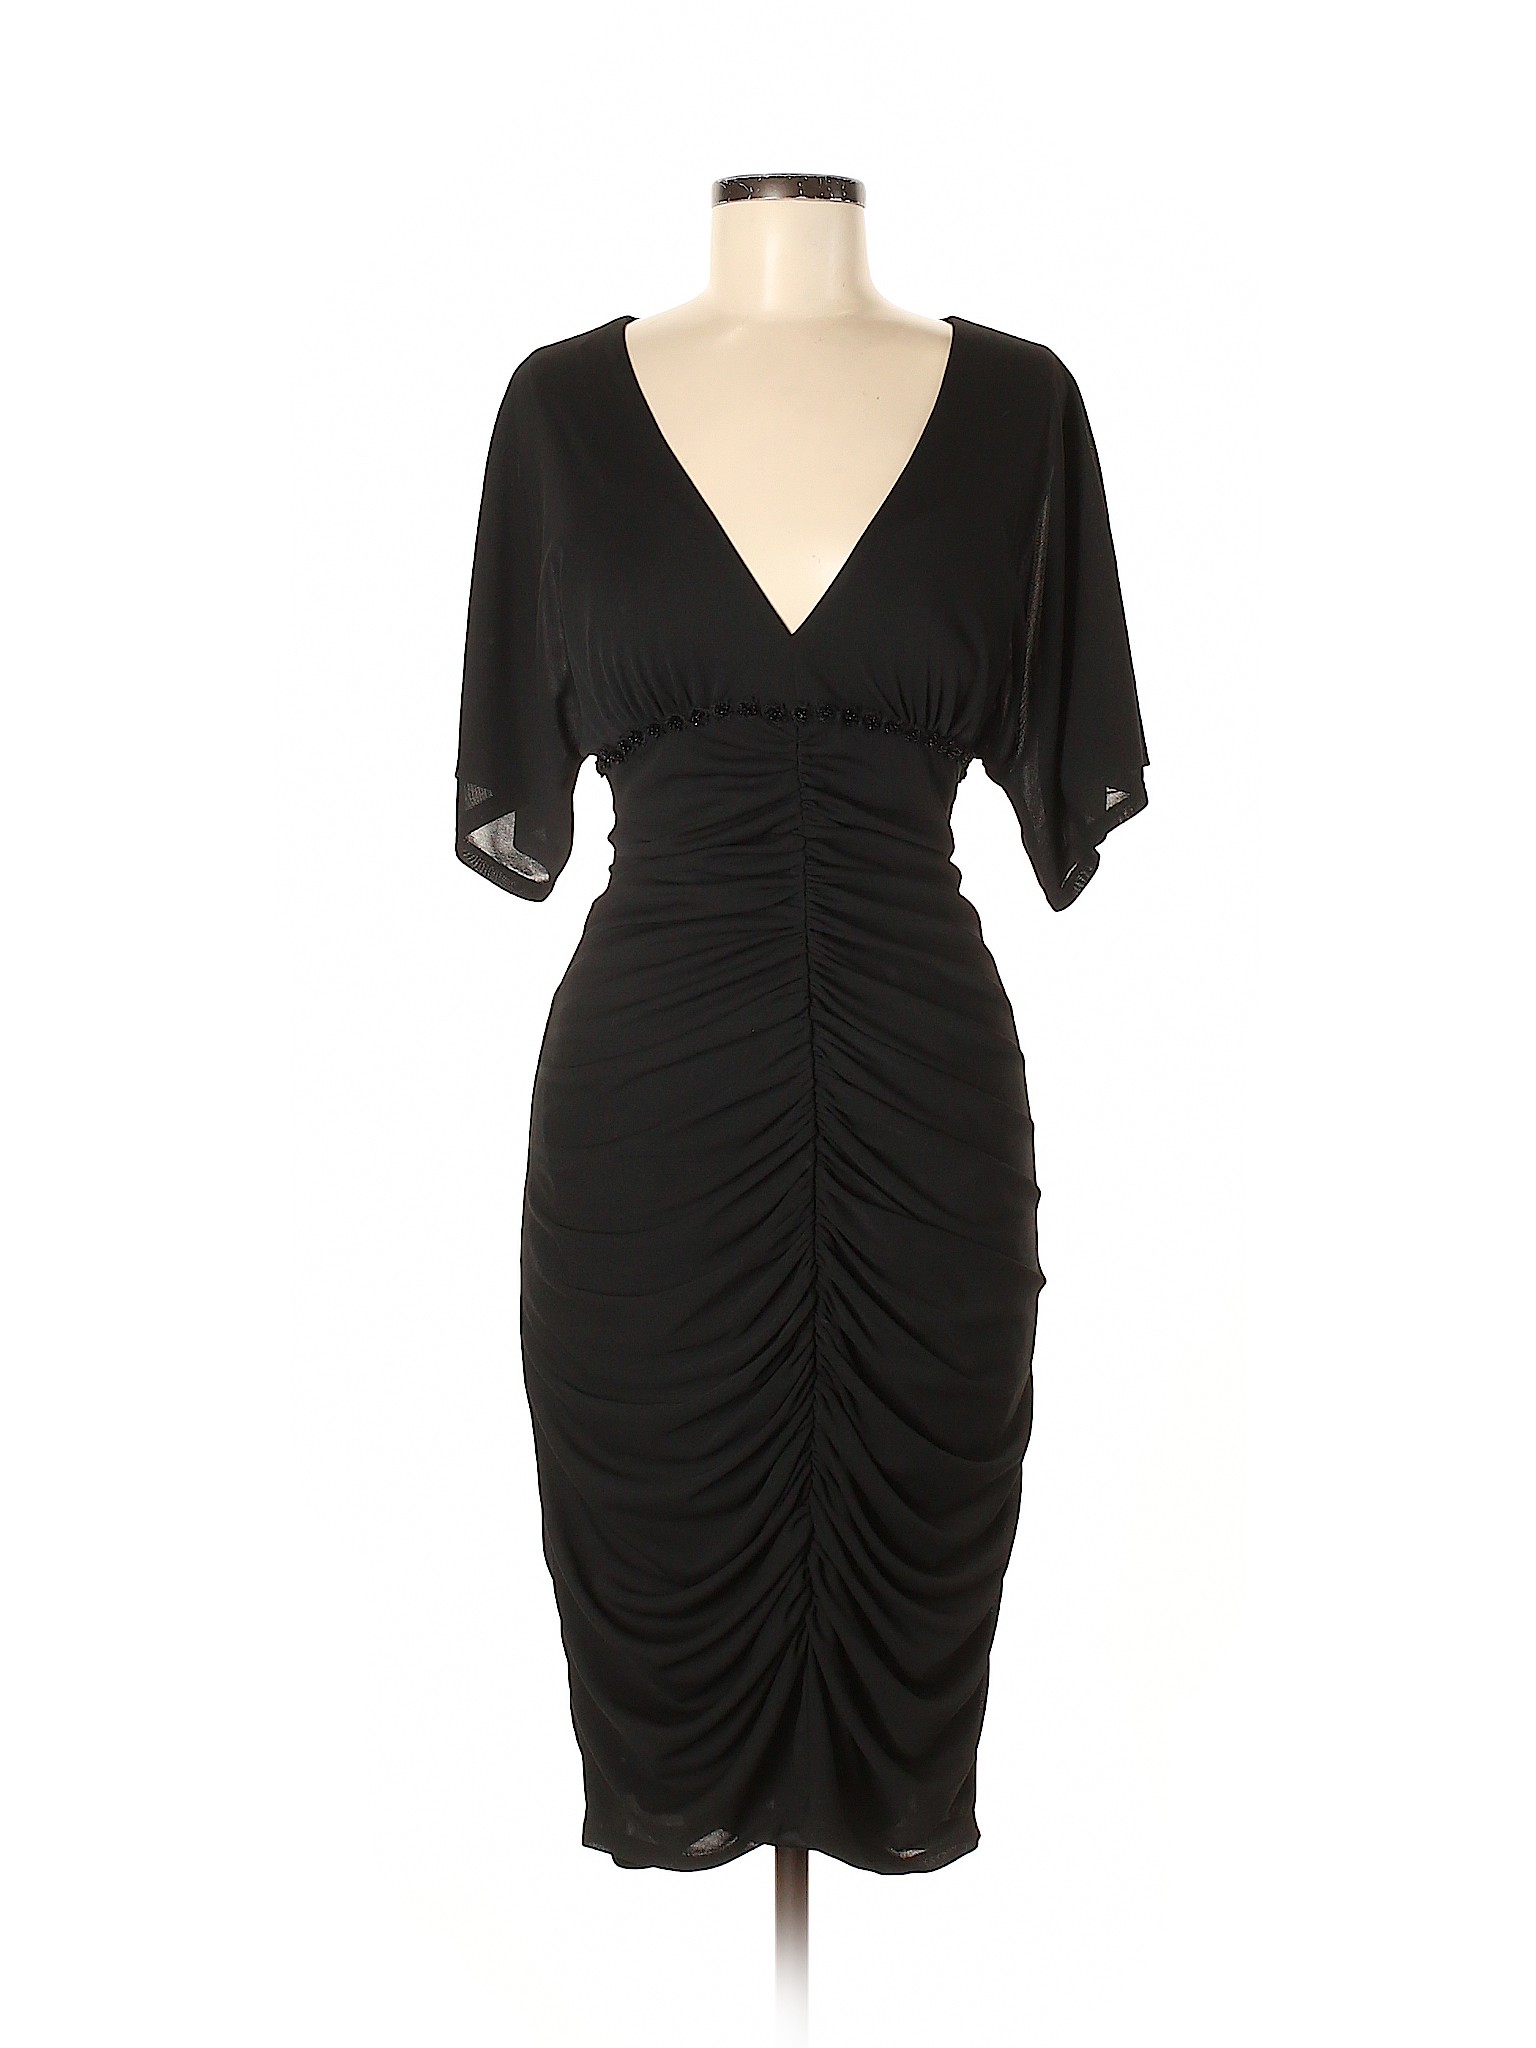 David Meister Women Black Cocktail Dress 8 | eBay